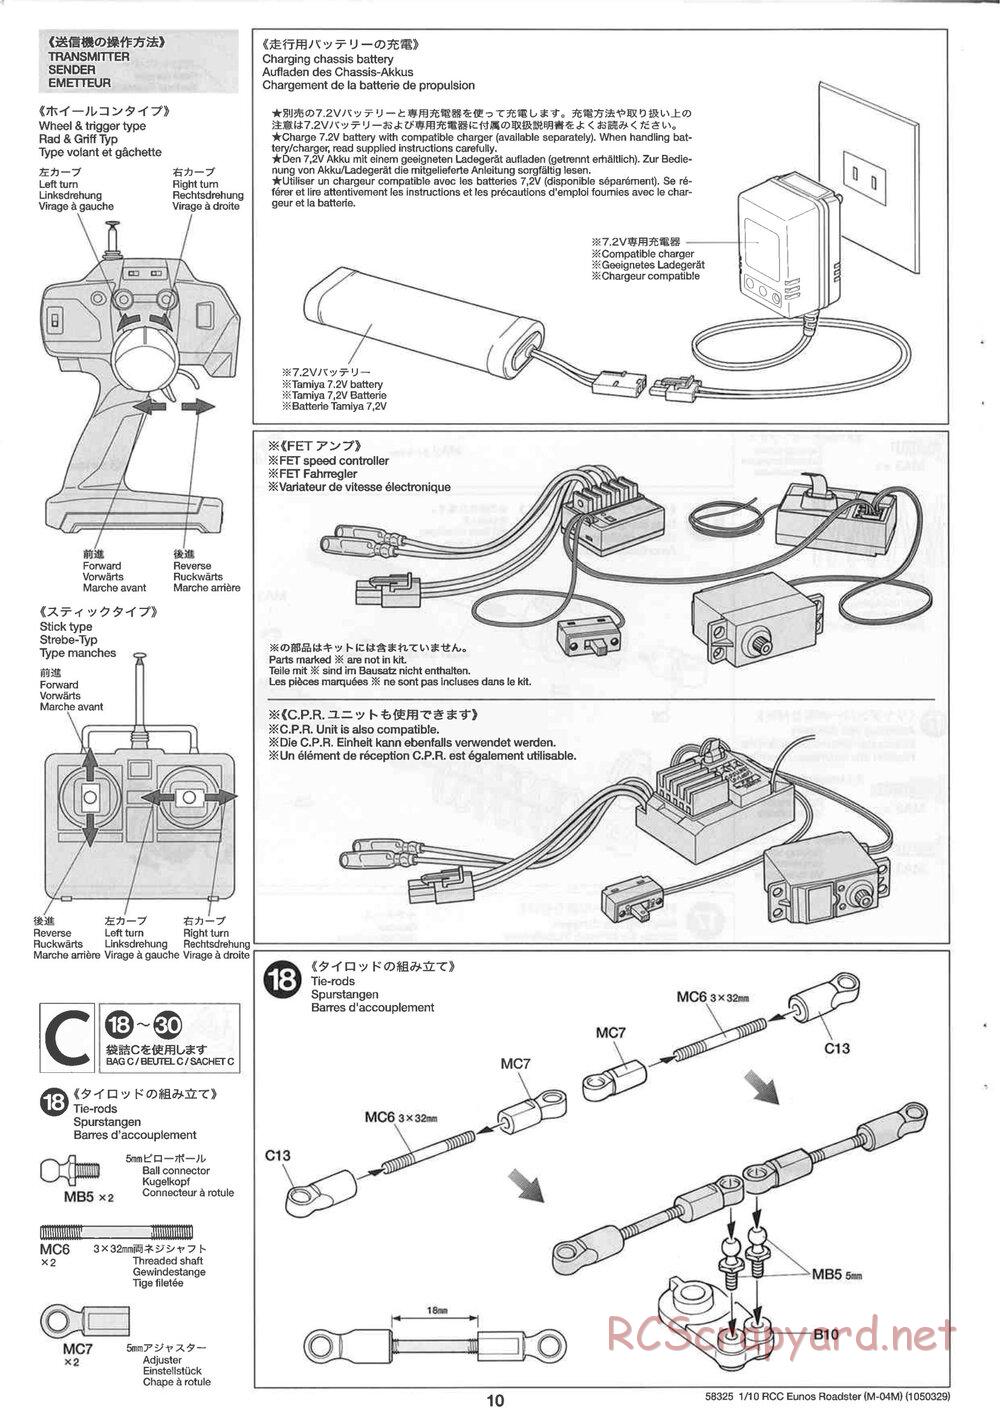 Tamiya - Eunos Roadster - M04M Chassis - Manual - Page 10